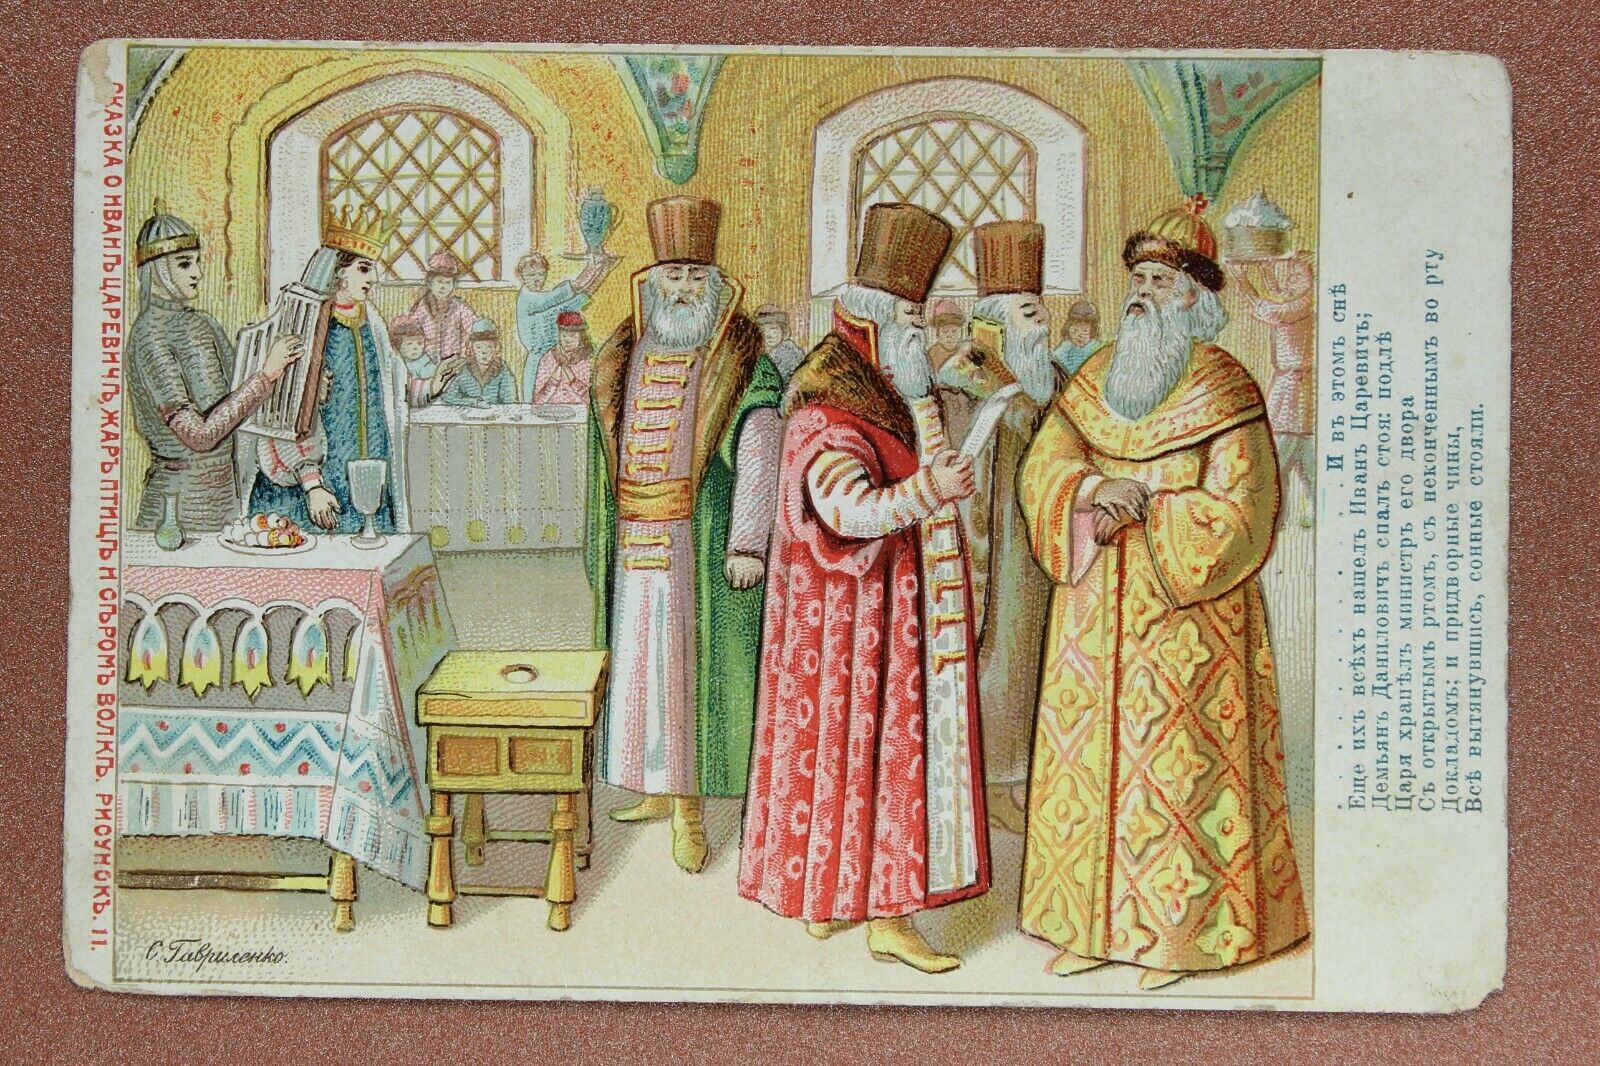 RARE Tsarist Russia Kiev postcard 1904 GAVRILENKO Ivan Tsarevich. Sleeping royal